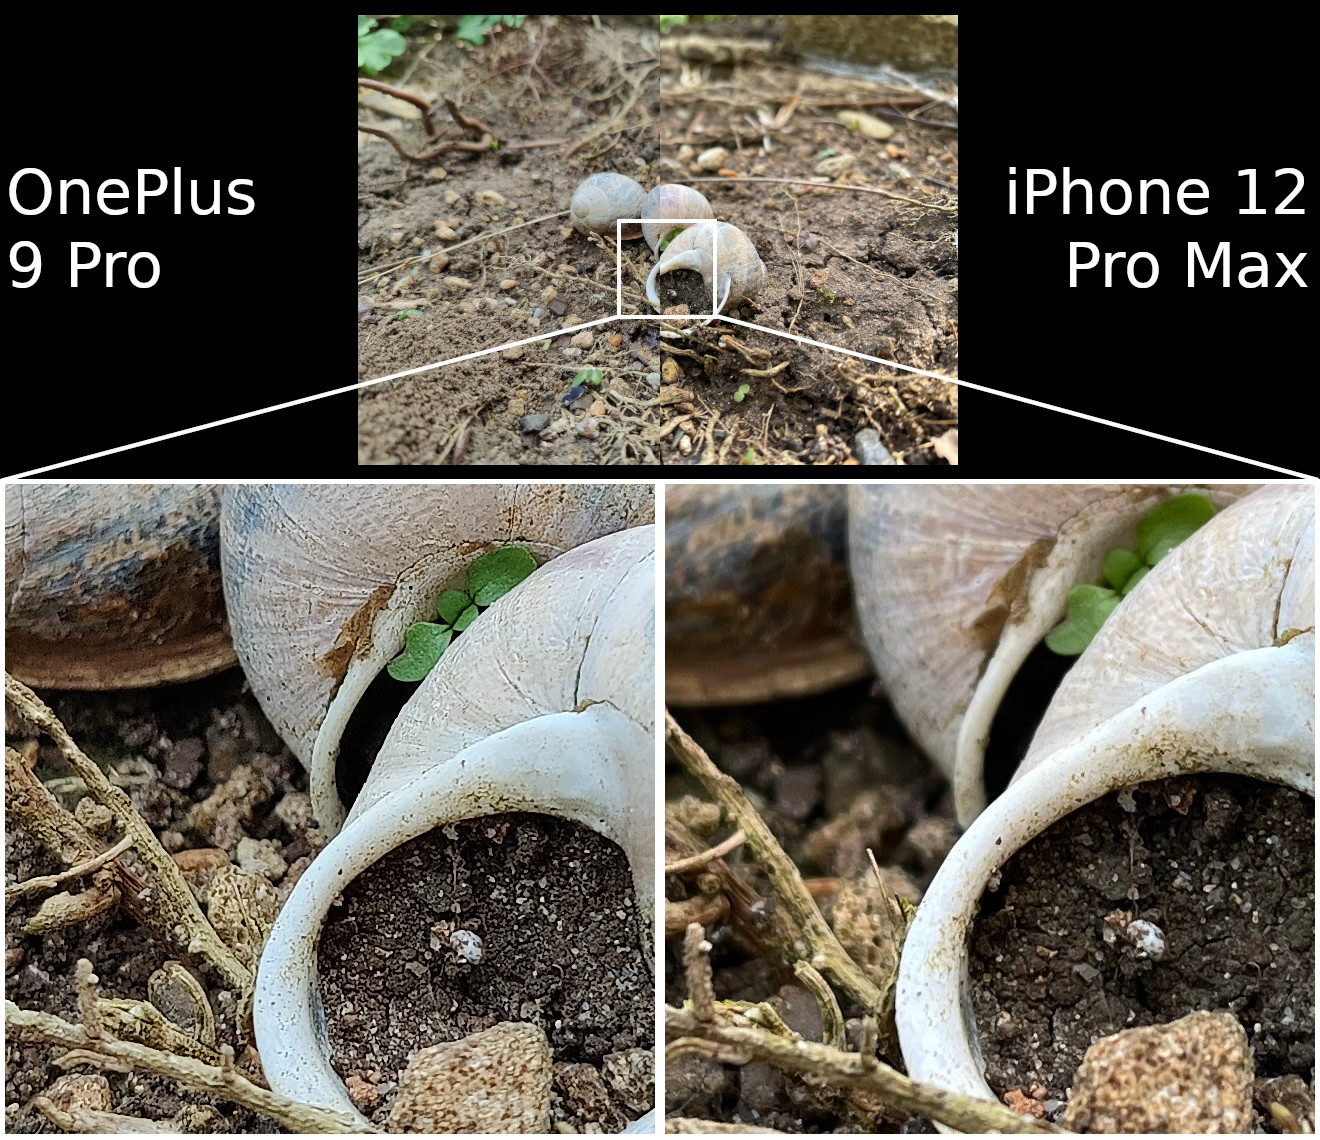 OnePlus 9 Pro vs iPhone 12 Pro Max detail